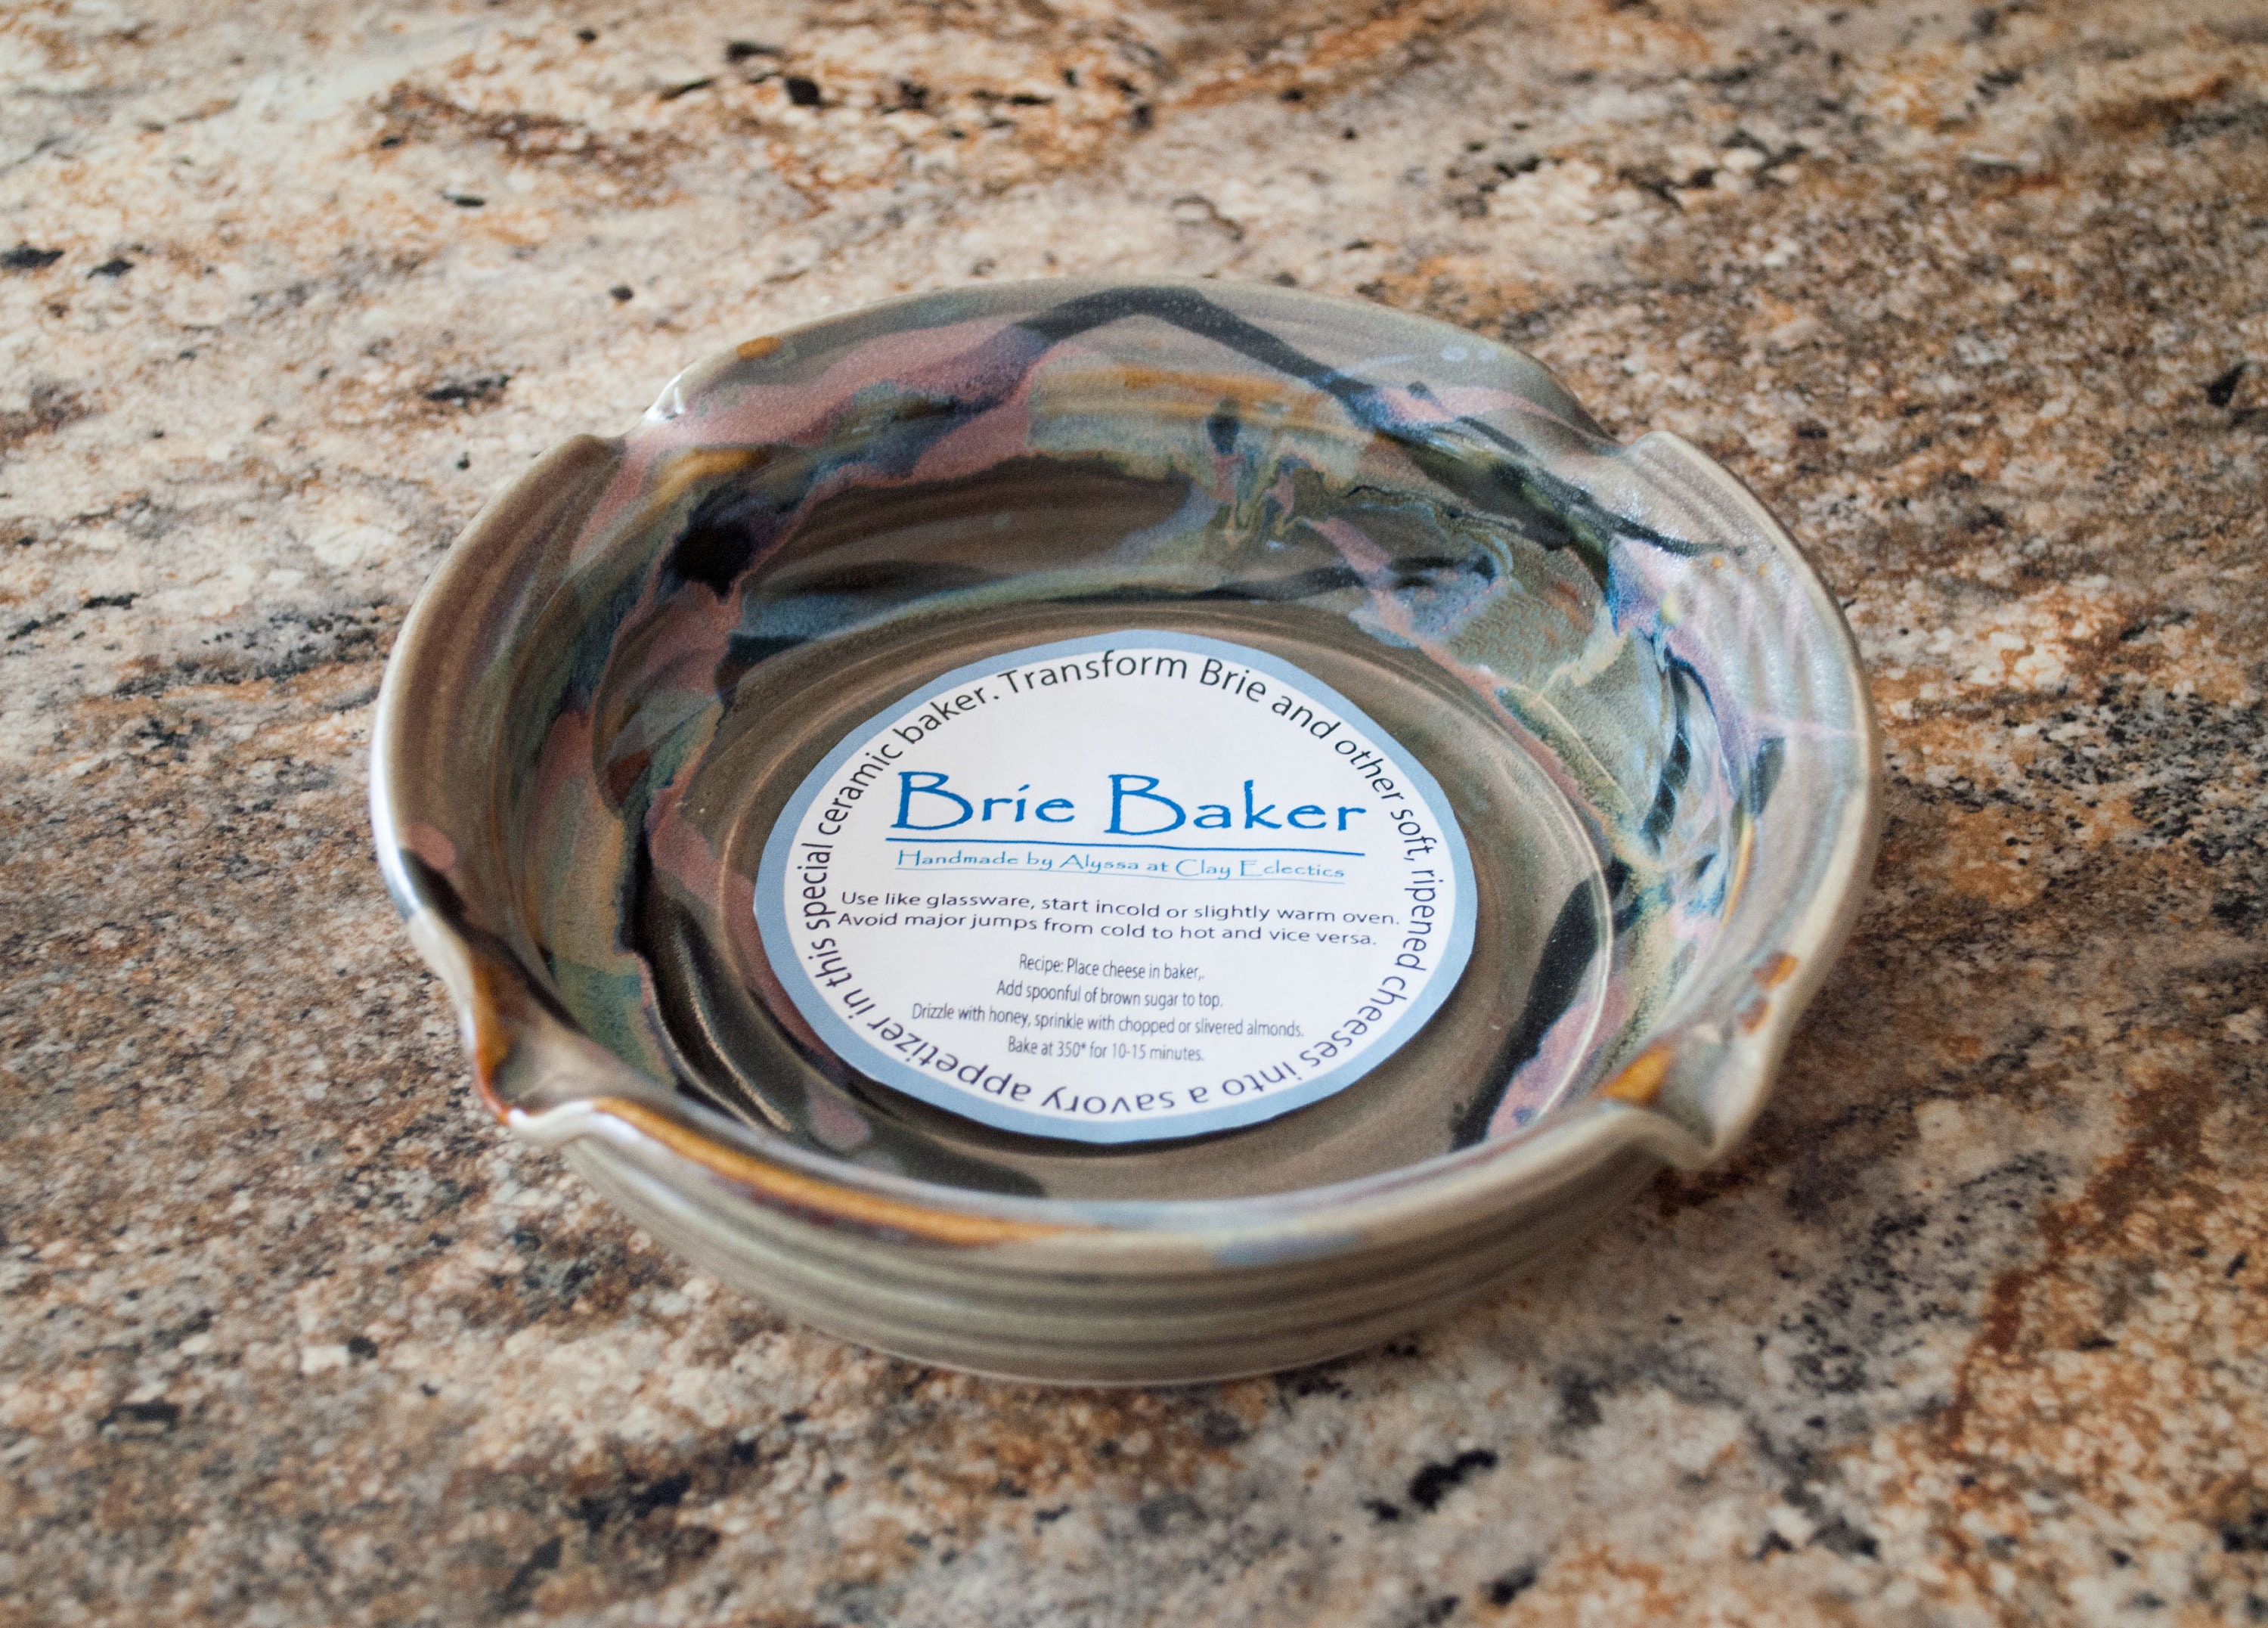 Ceramic Brie Baker & Spreader Set